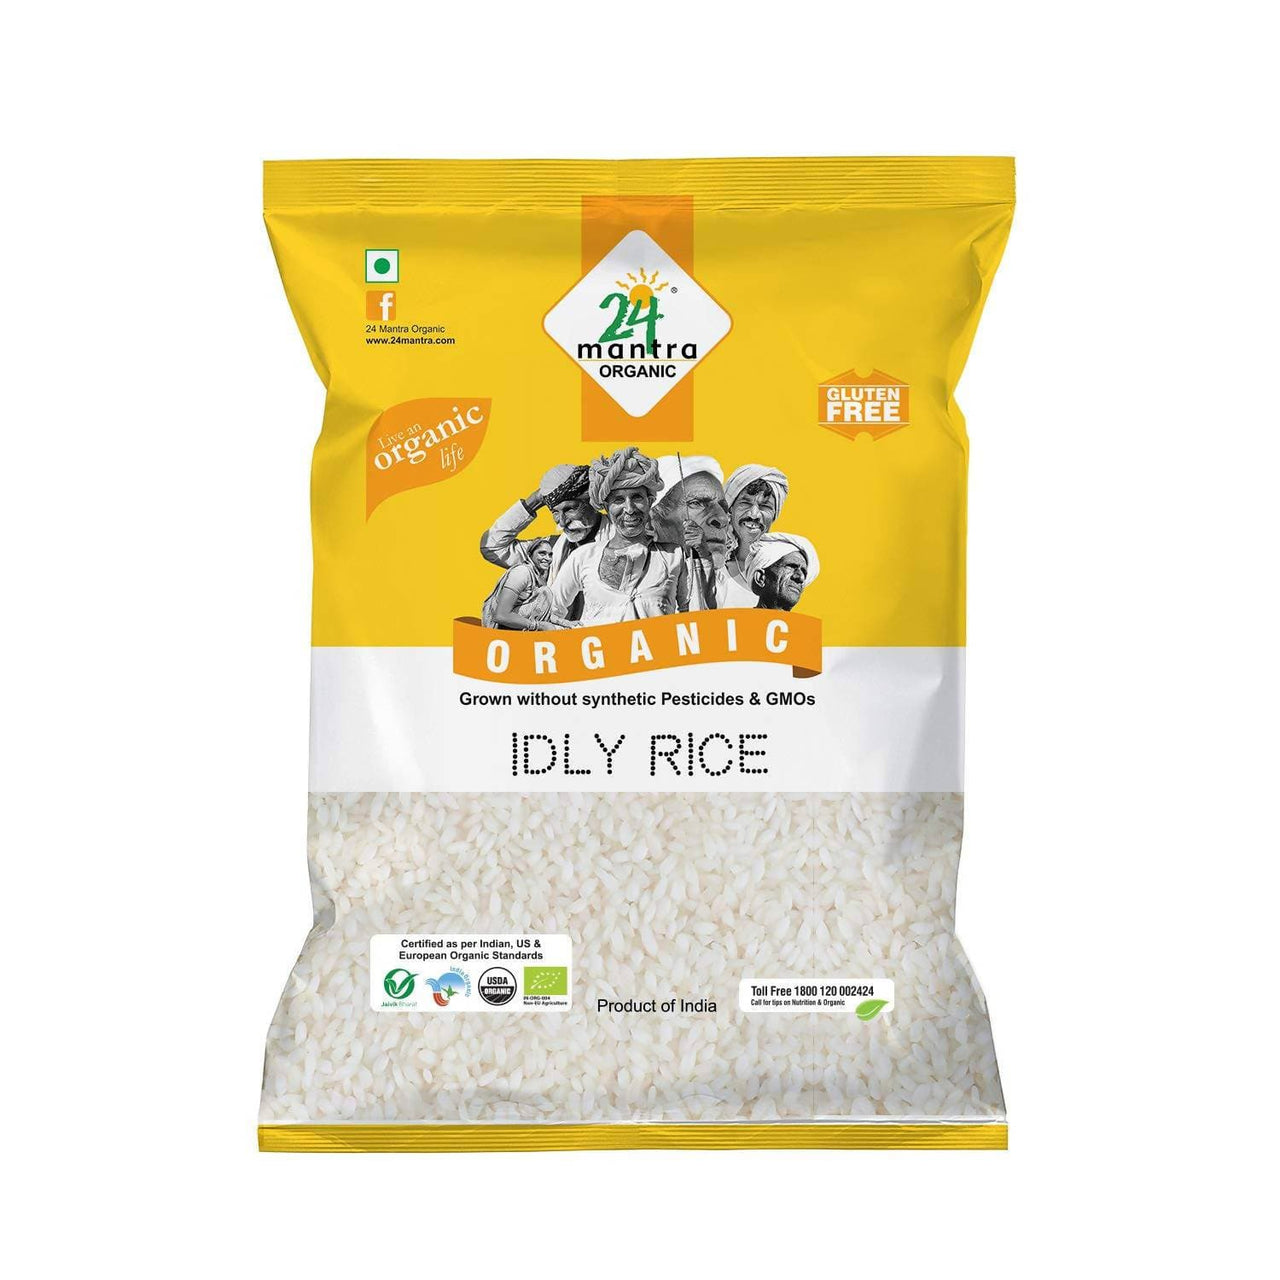 24 Mantra Organic Idly Rice